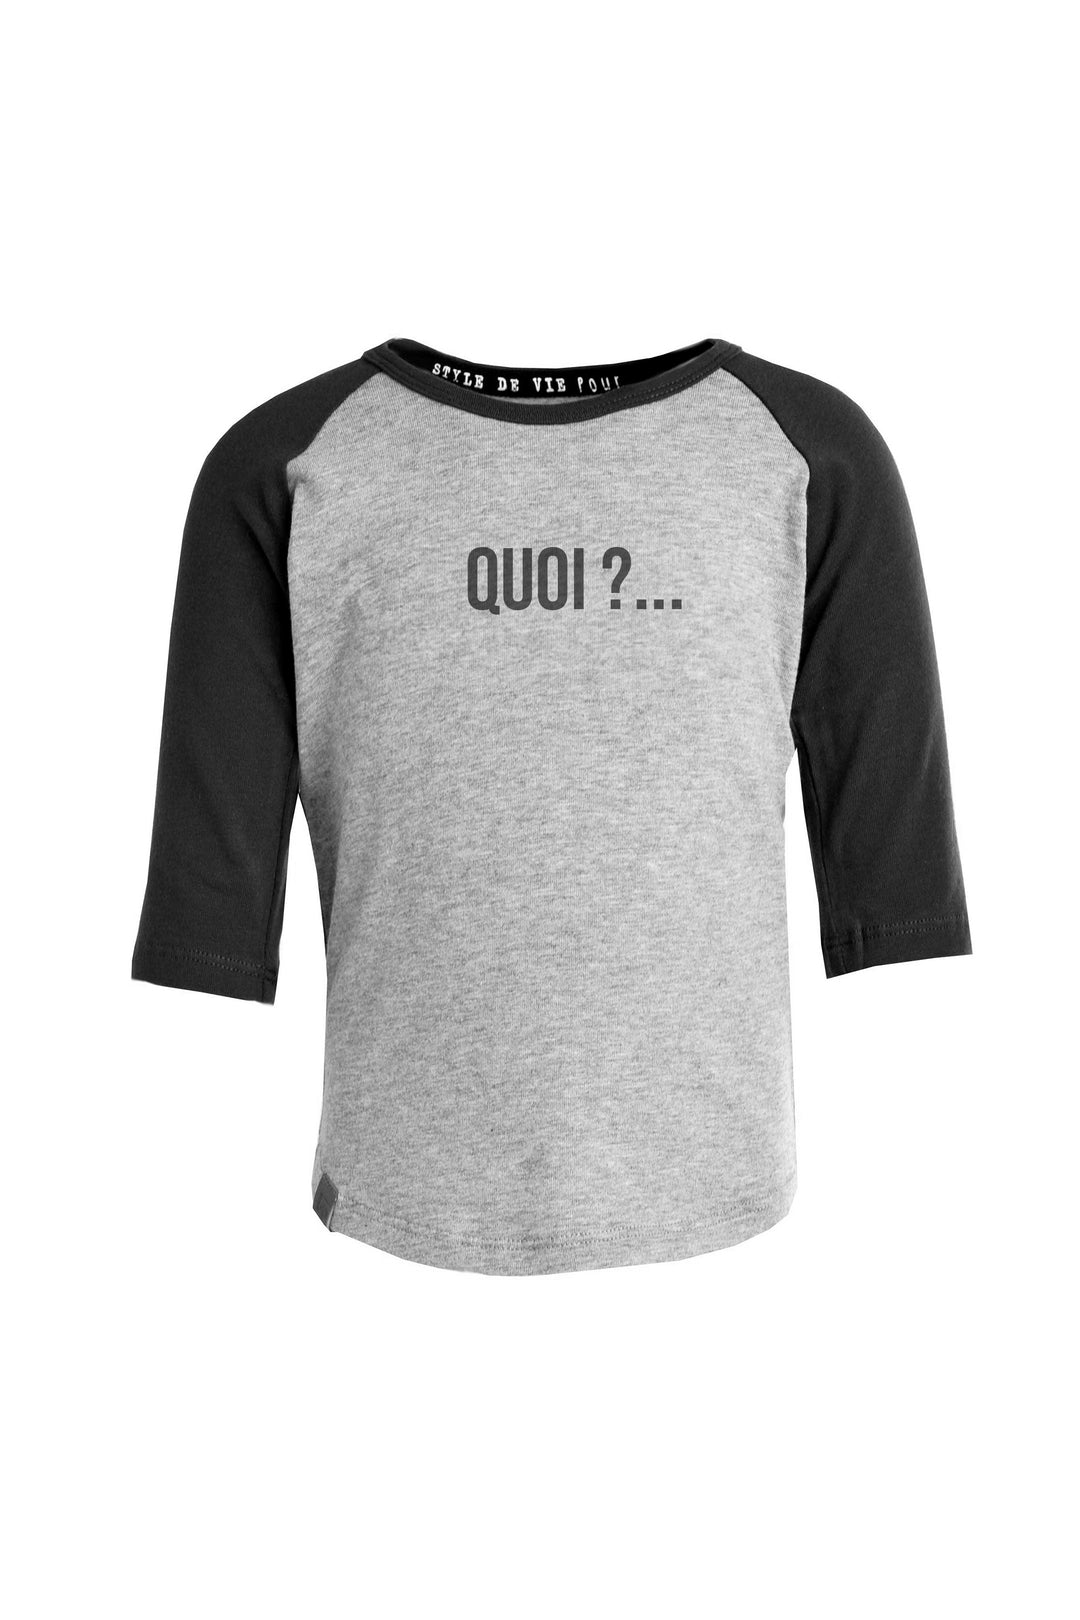 Ultra Comfy 3/4 Sleeve Shirt [Junior] [Quoicoubeh]